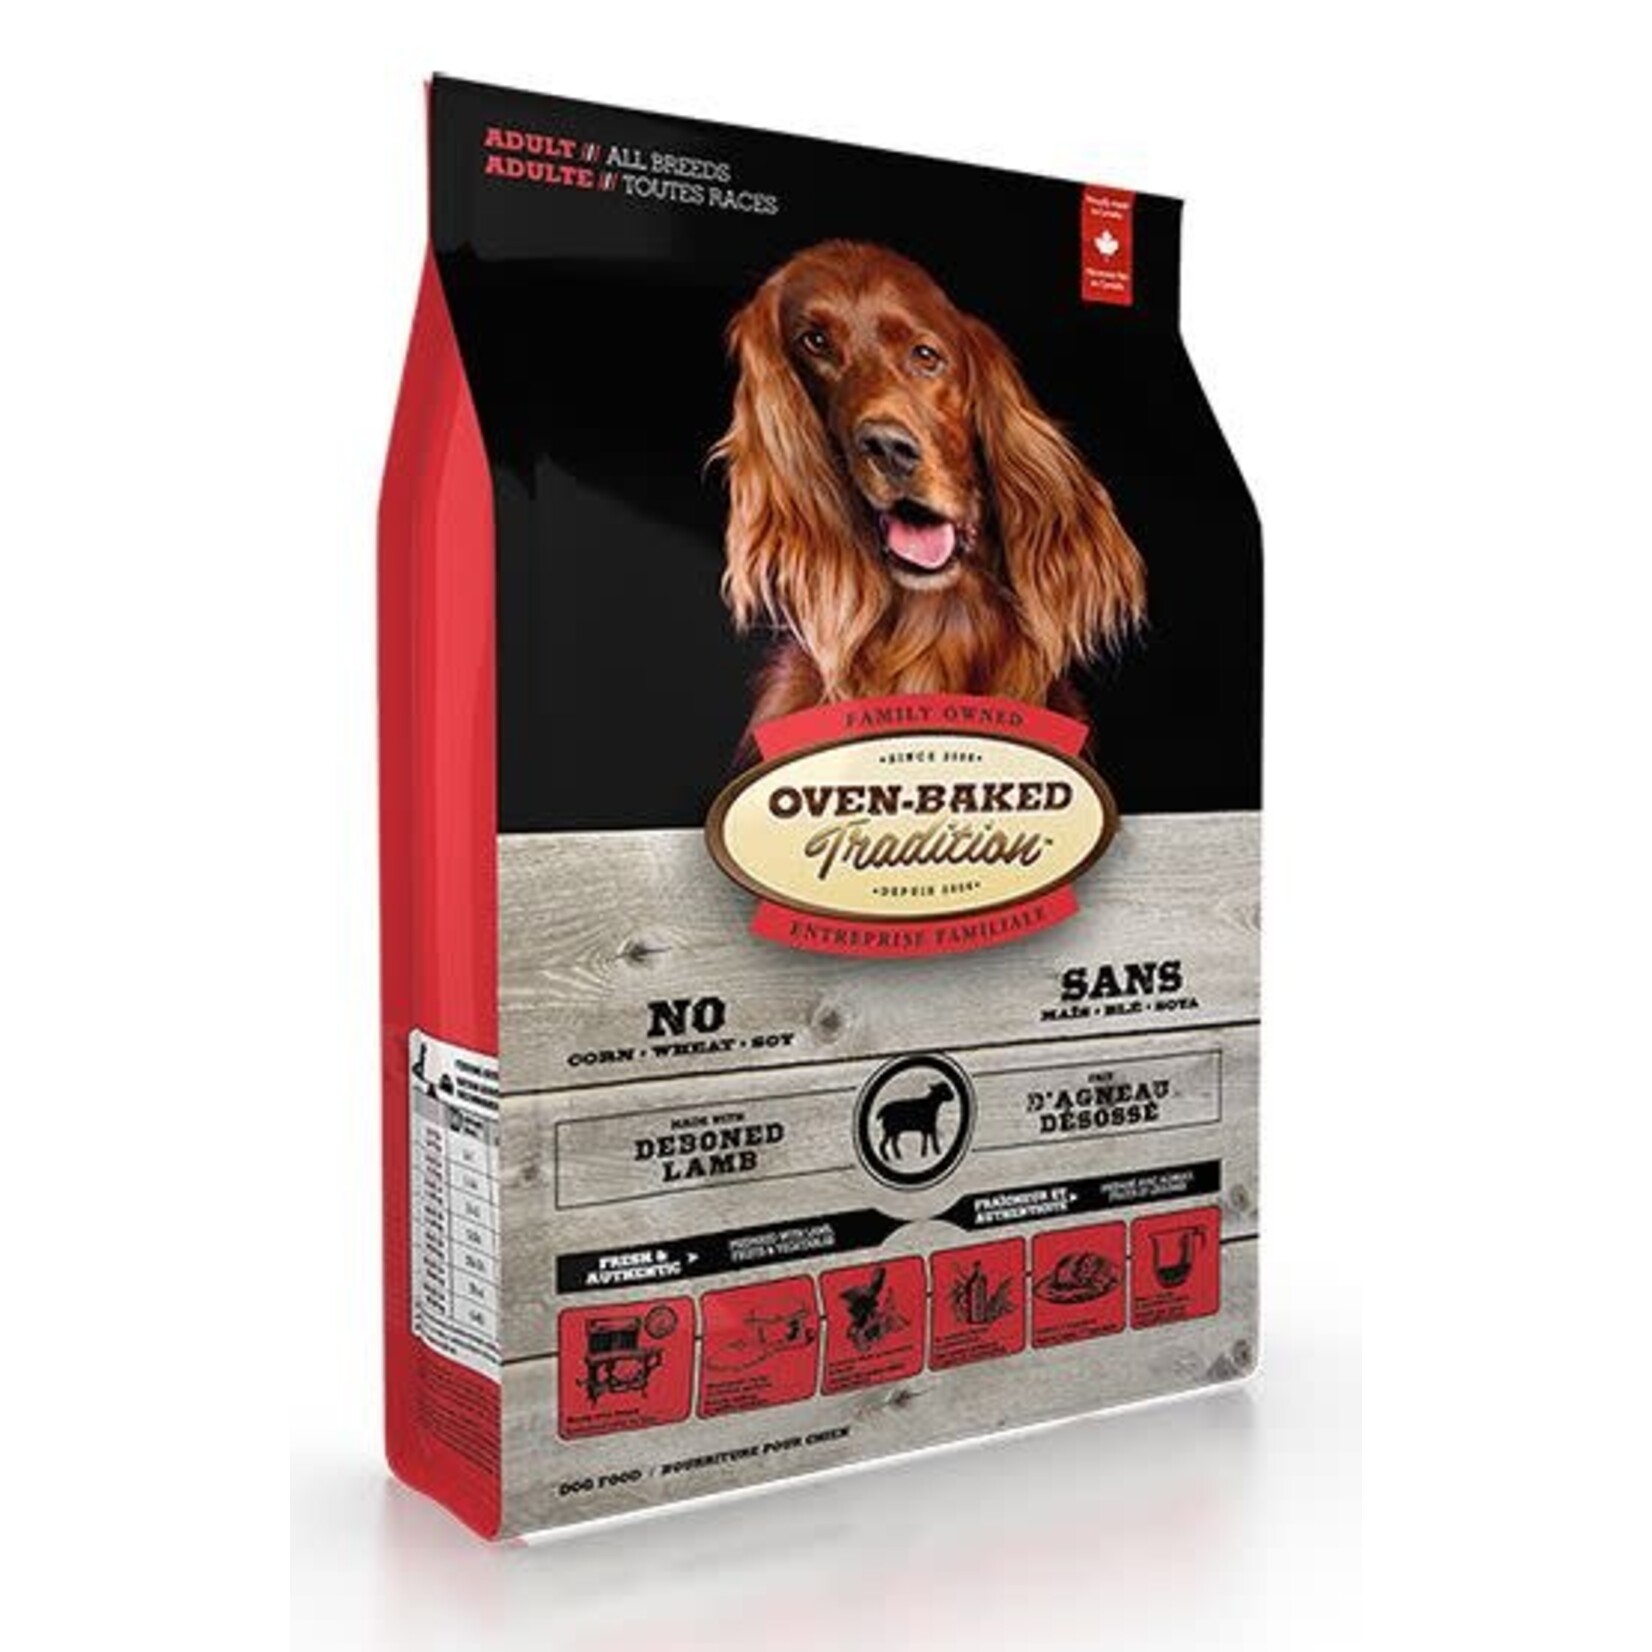 Oven-Baked Tradition OBT Adult Dog